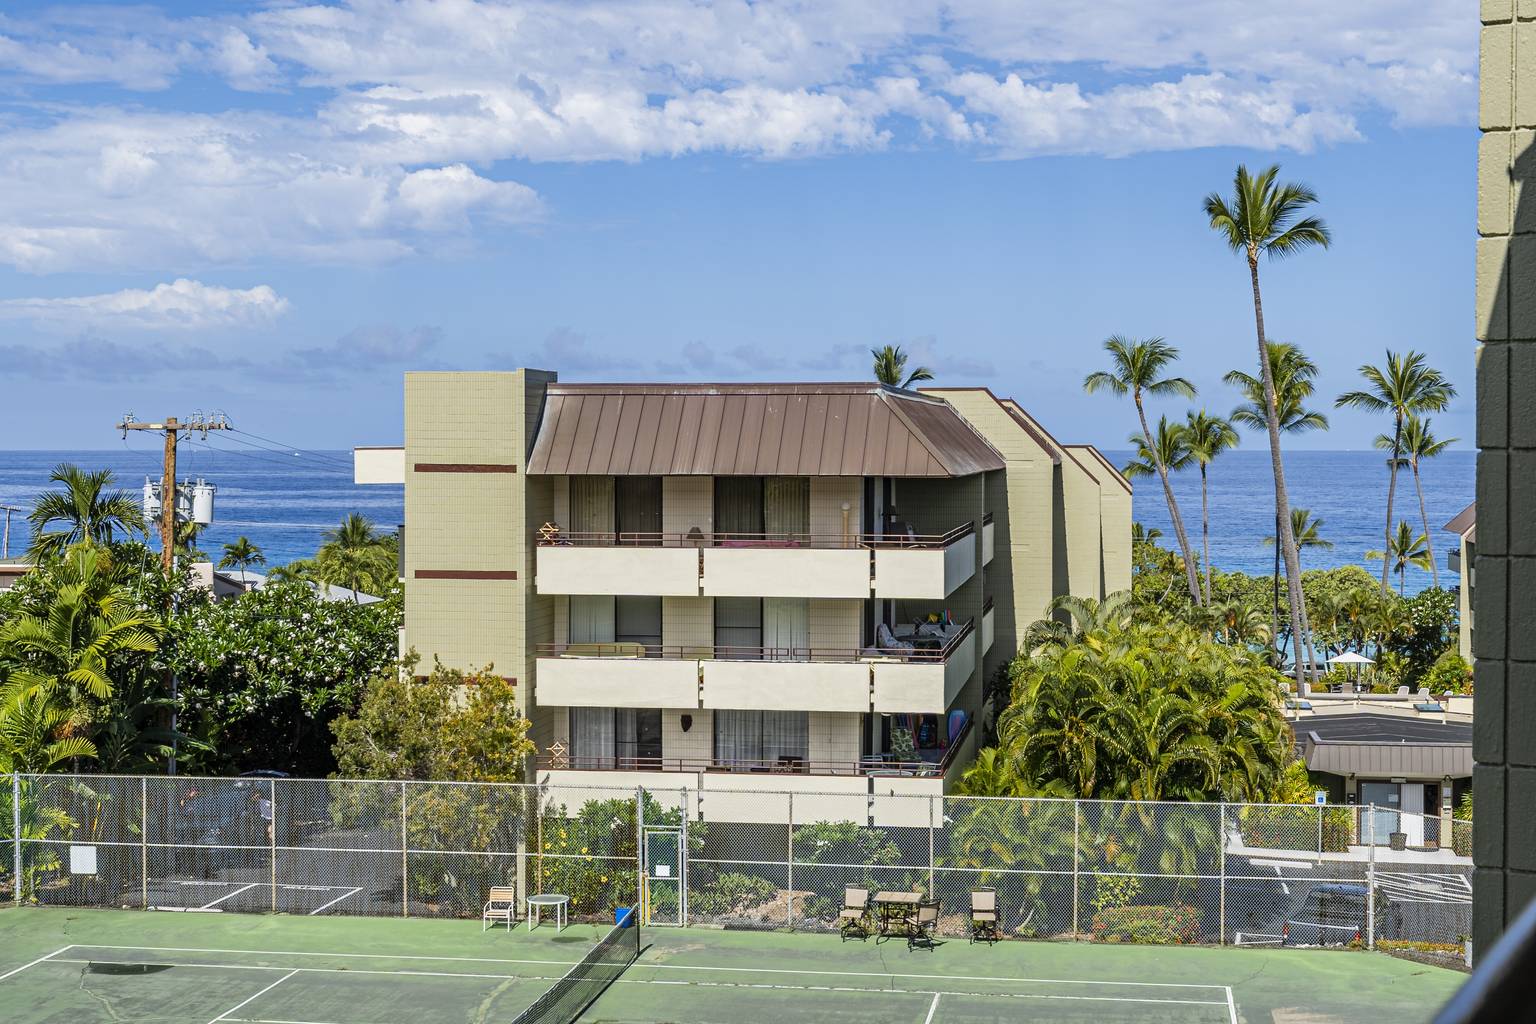 Kailua-Kona Vacation Rental